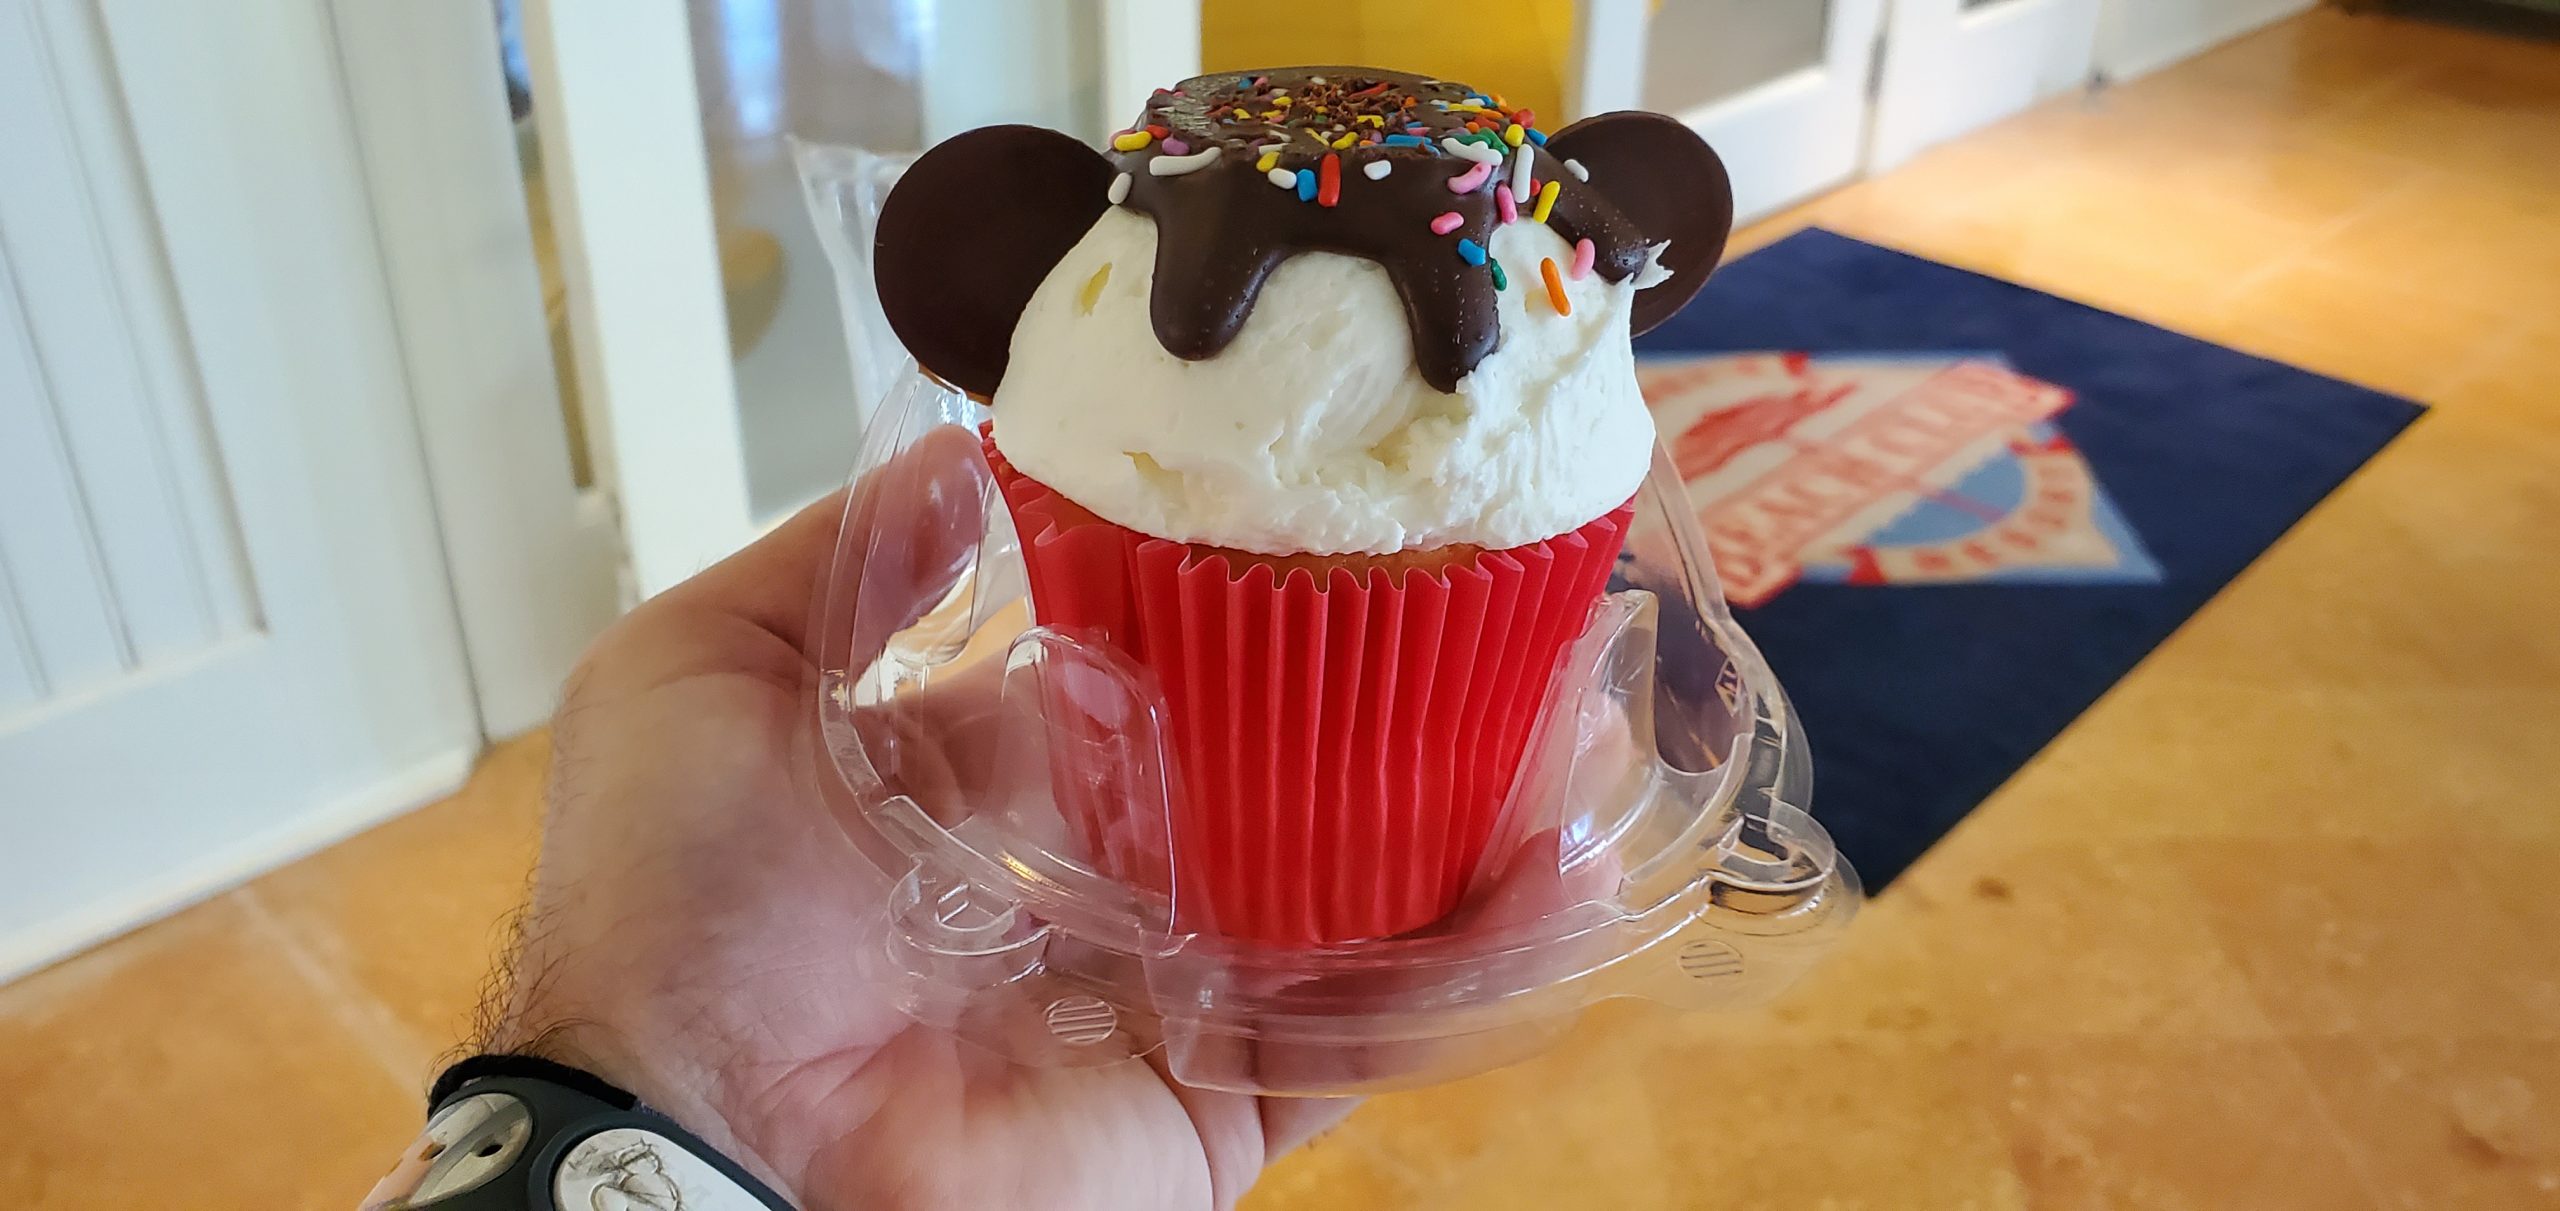 Mickey Sundae Cupcake Available At Walt Disney World!